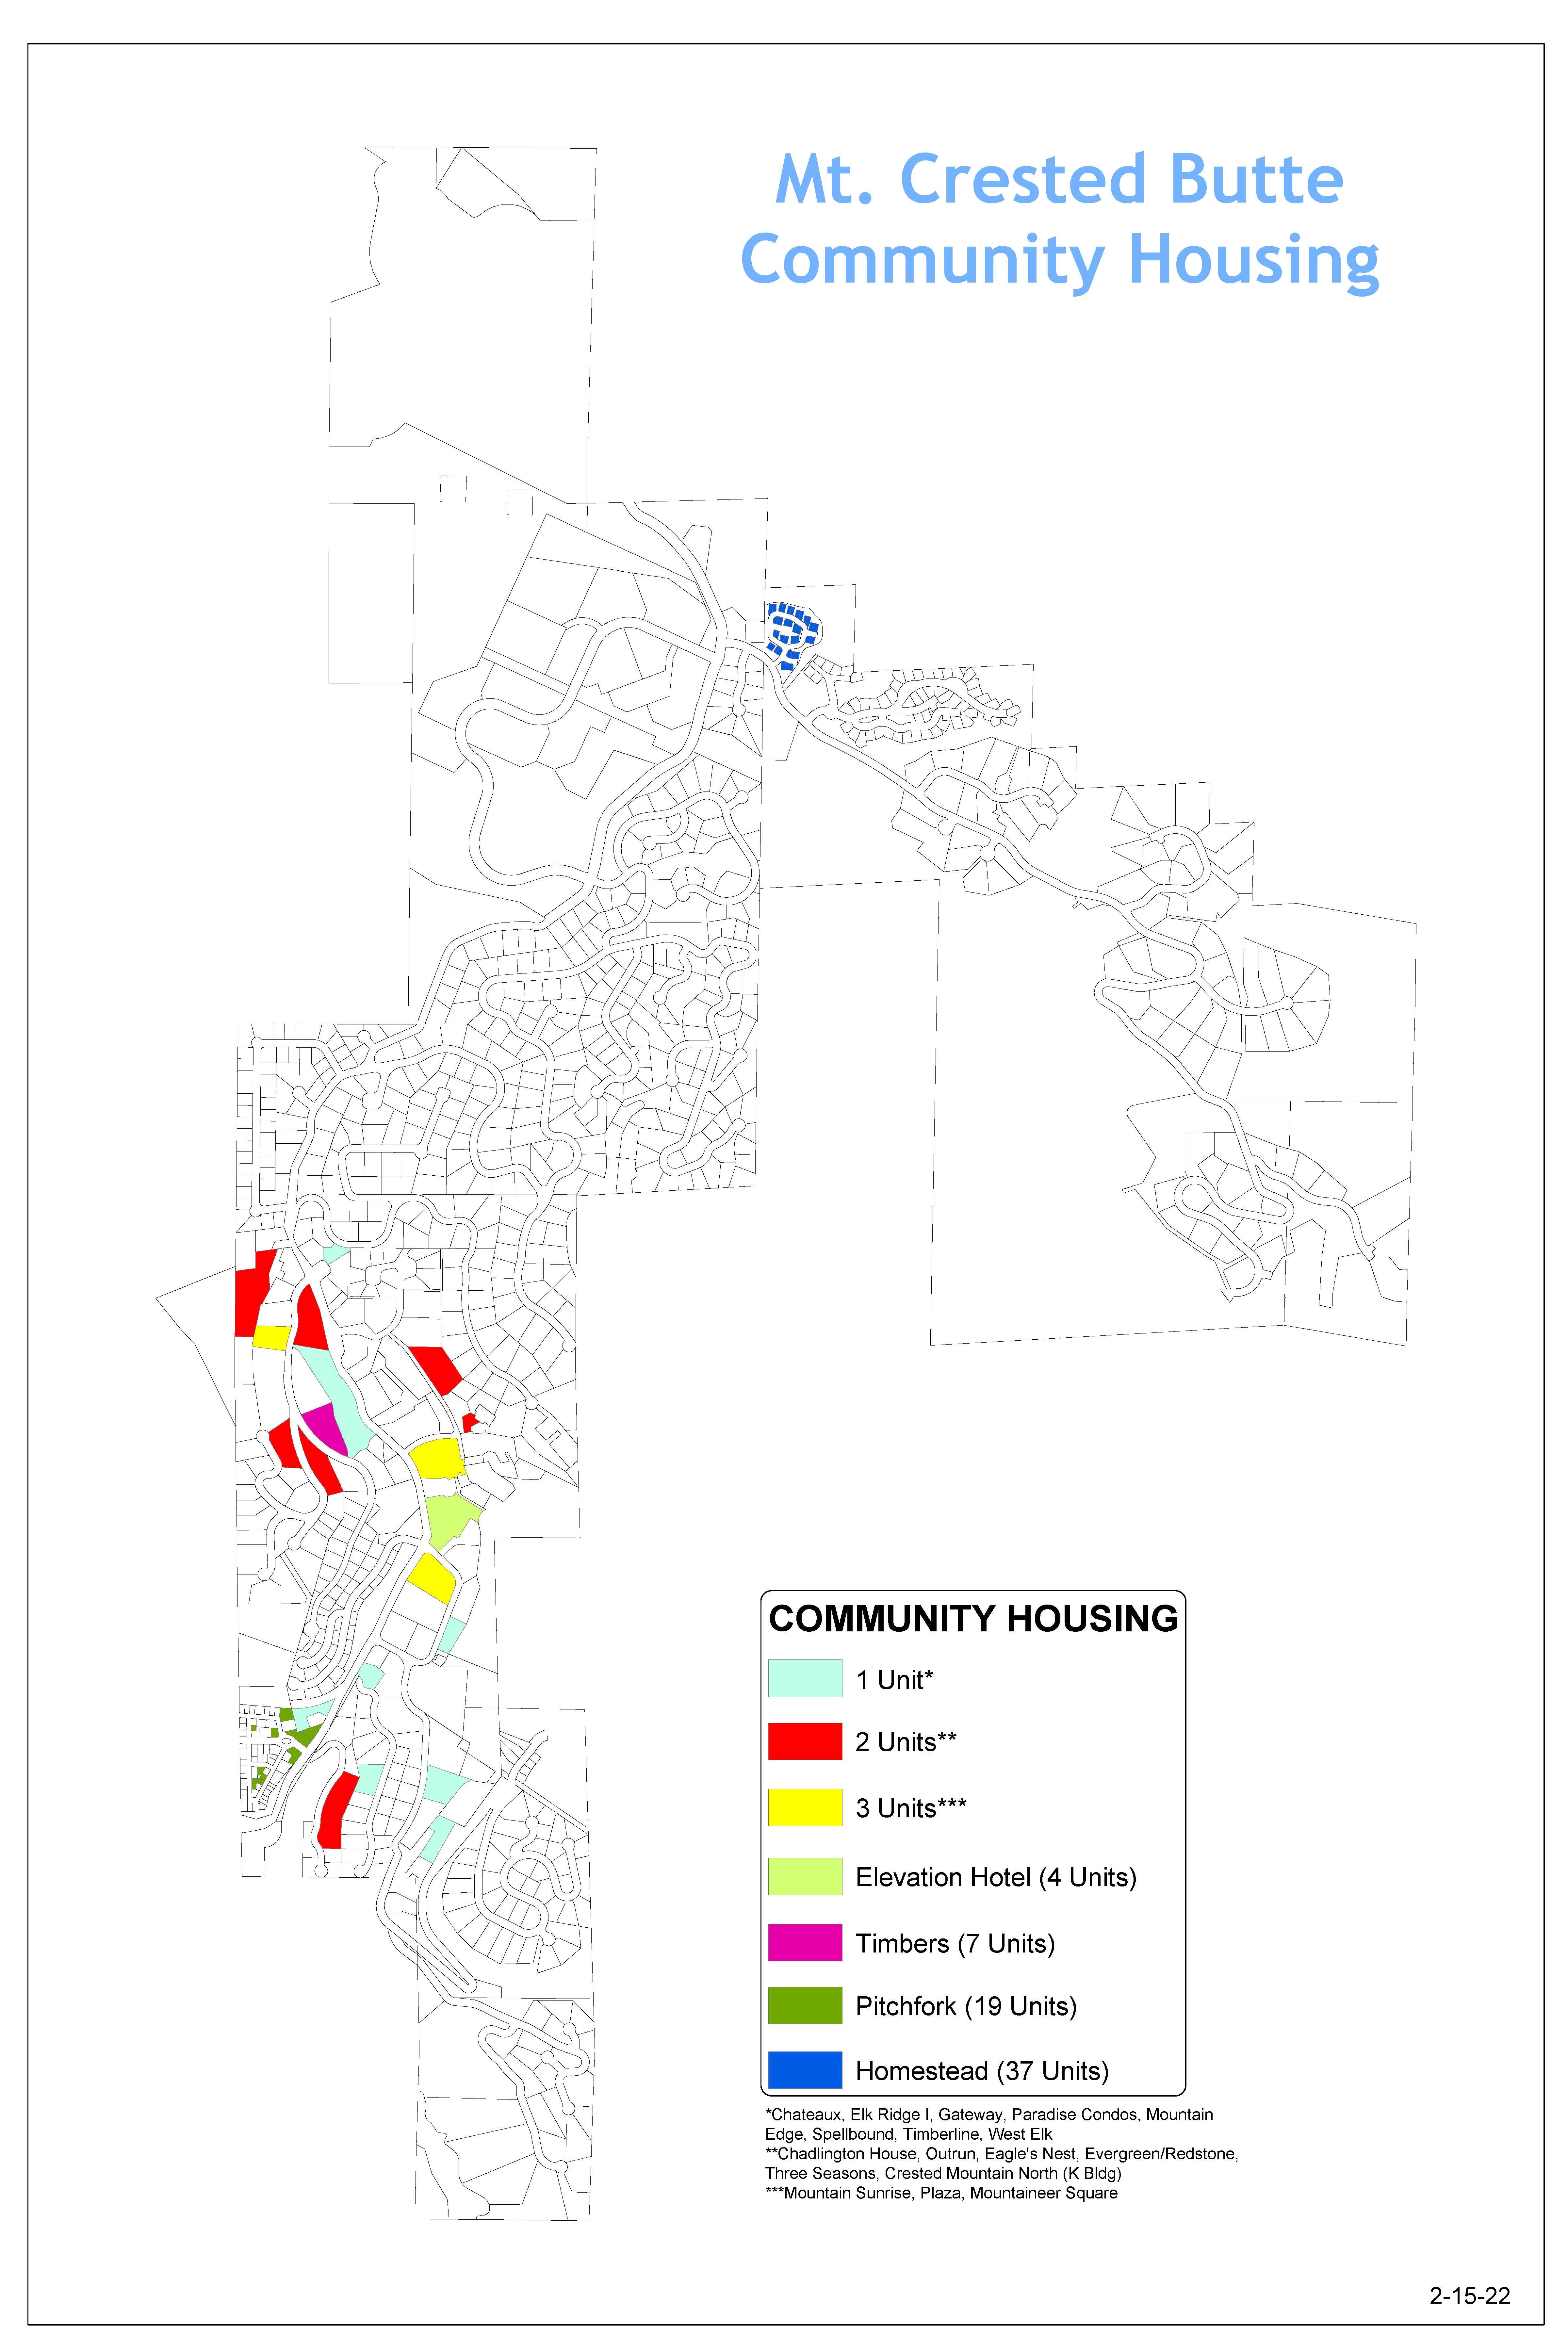 MTCB Community Housing Map